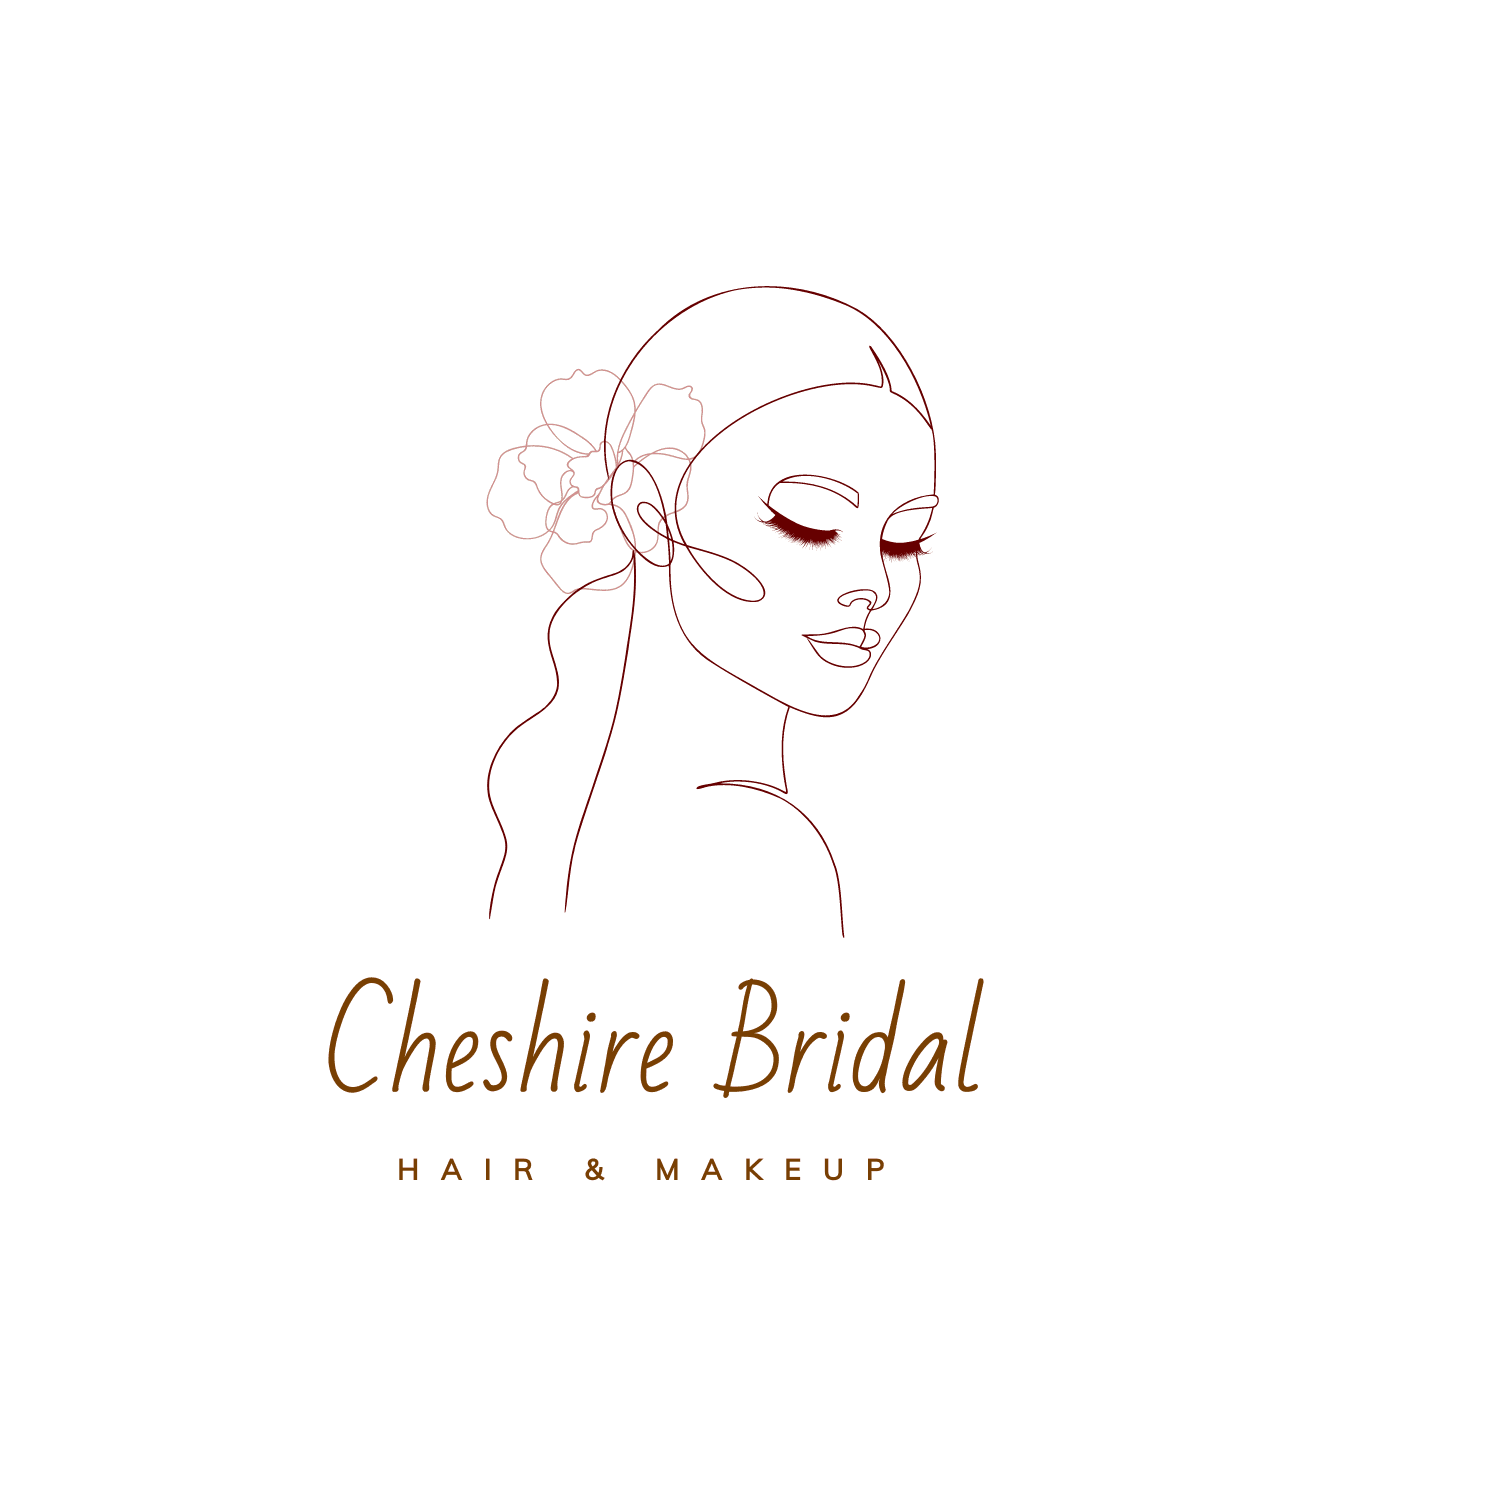 Cheshire Bridal Hair & Makeup